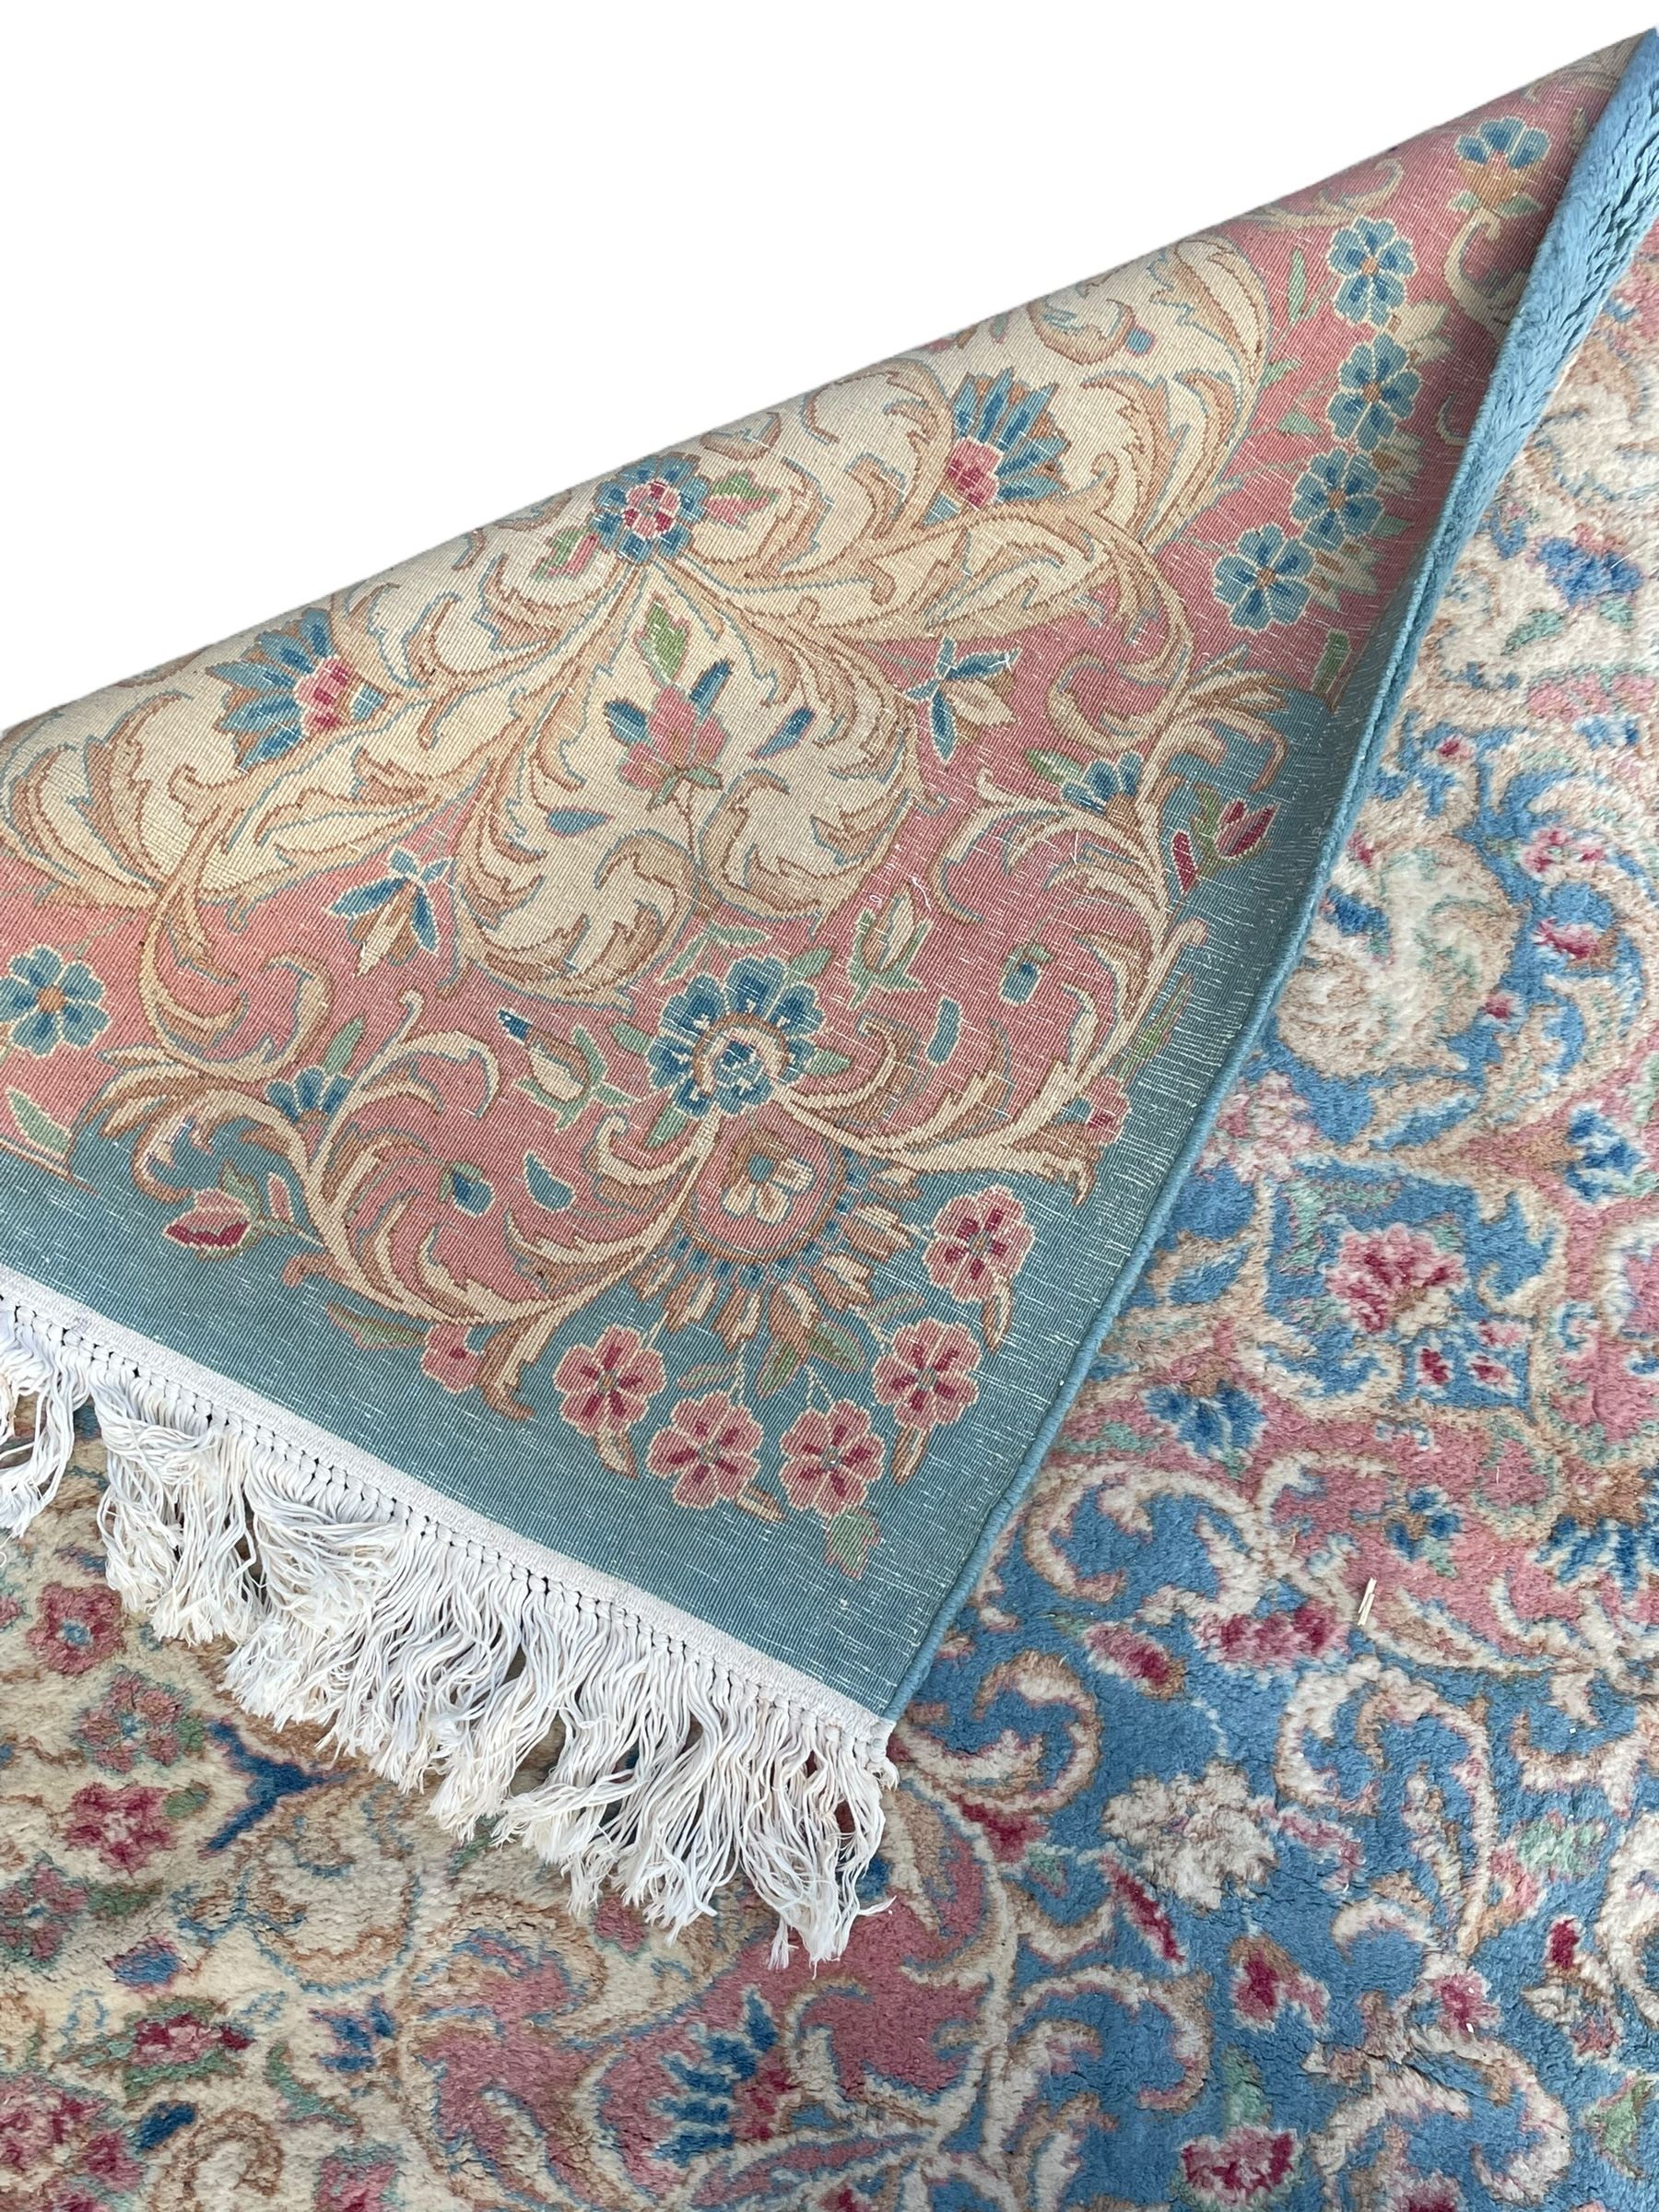 Large Persian design carpet - Image 8 of 8